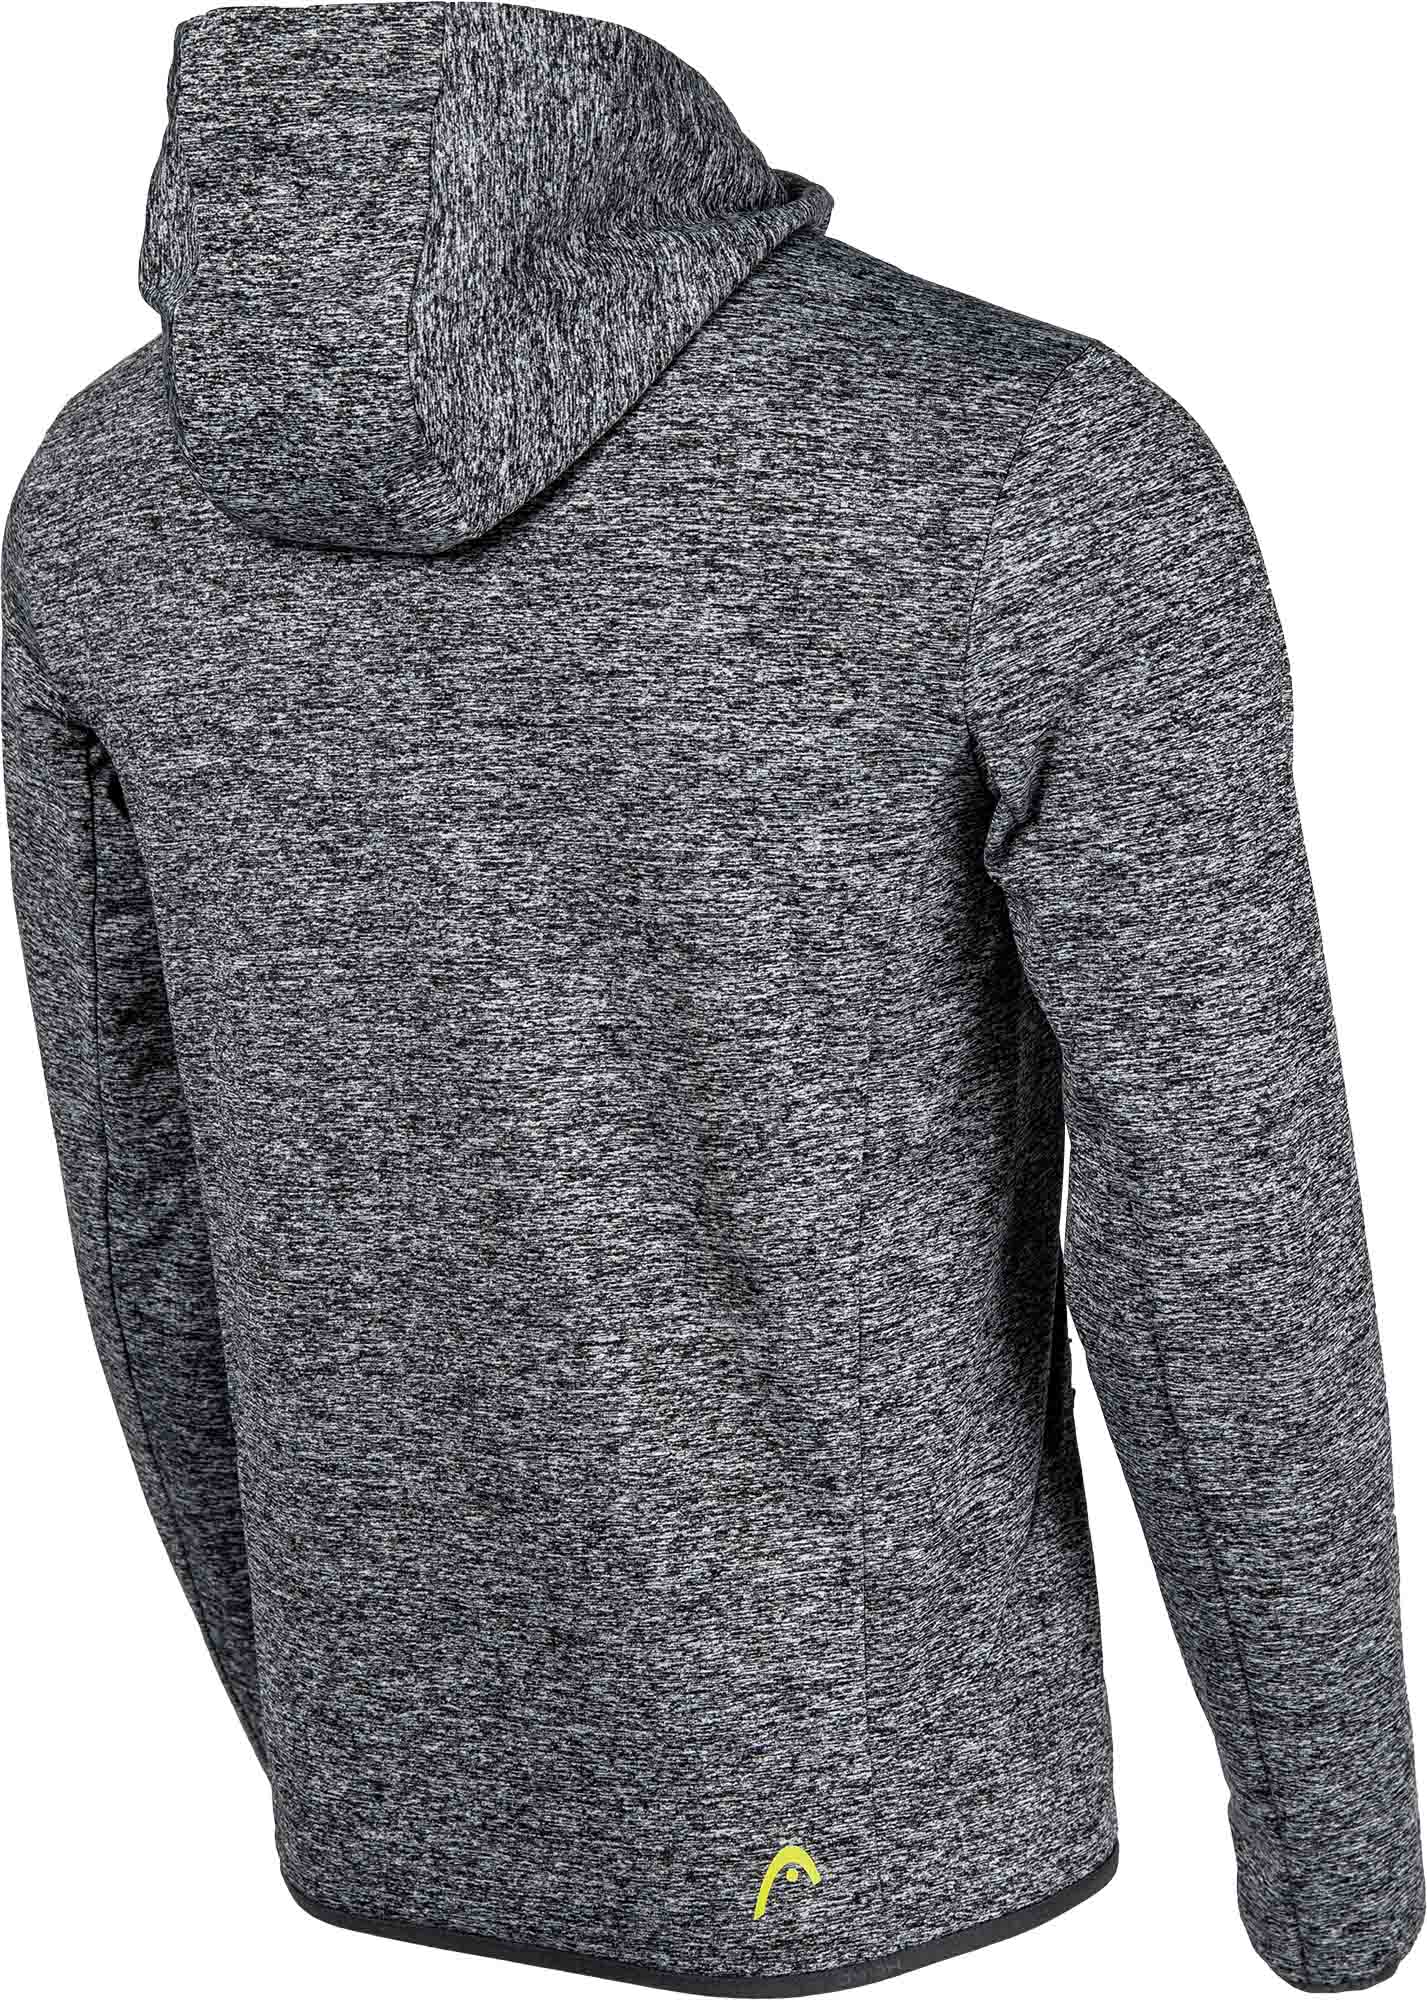 Men’s hybrid sweatshirt